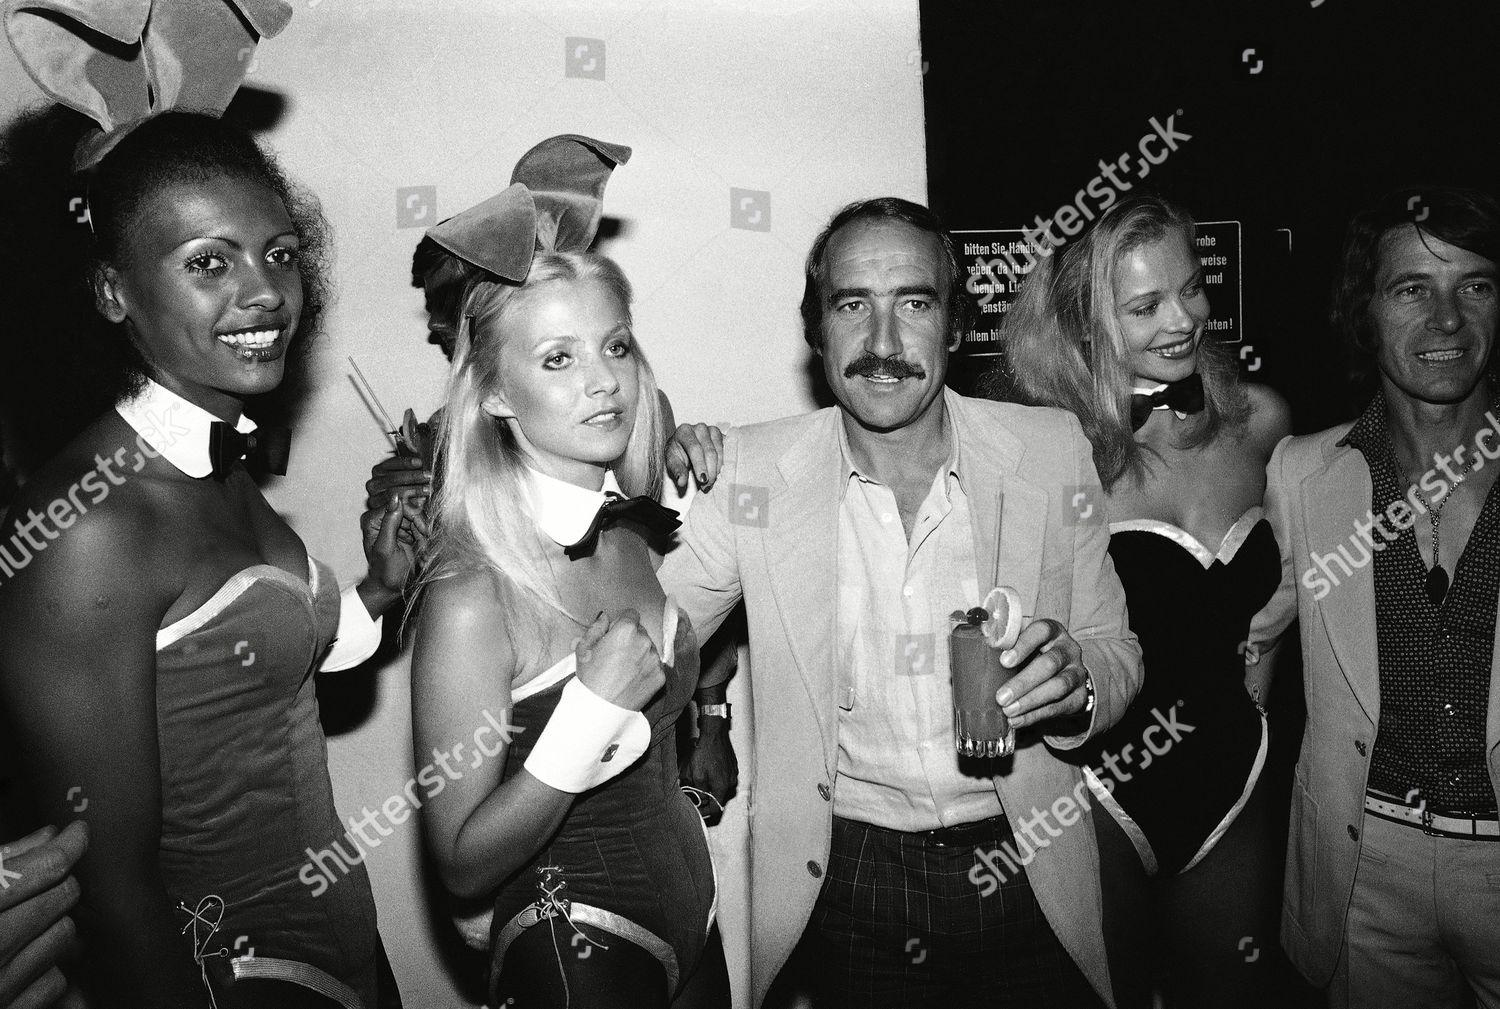 Clay Regazzoni with Arturio Merzario and three bunny girls.